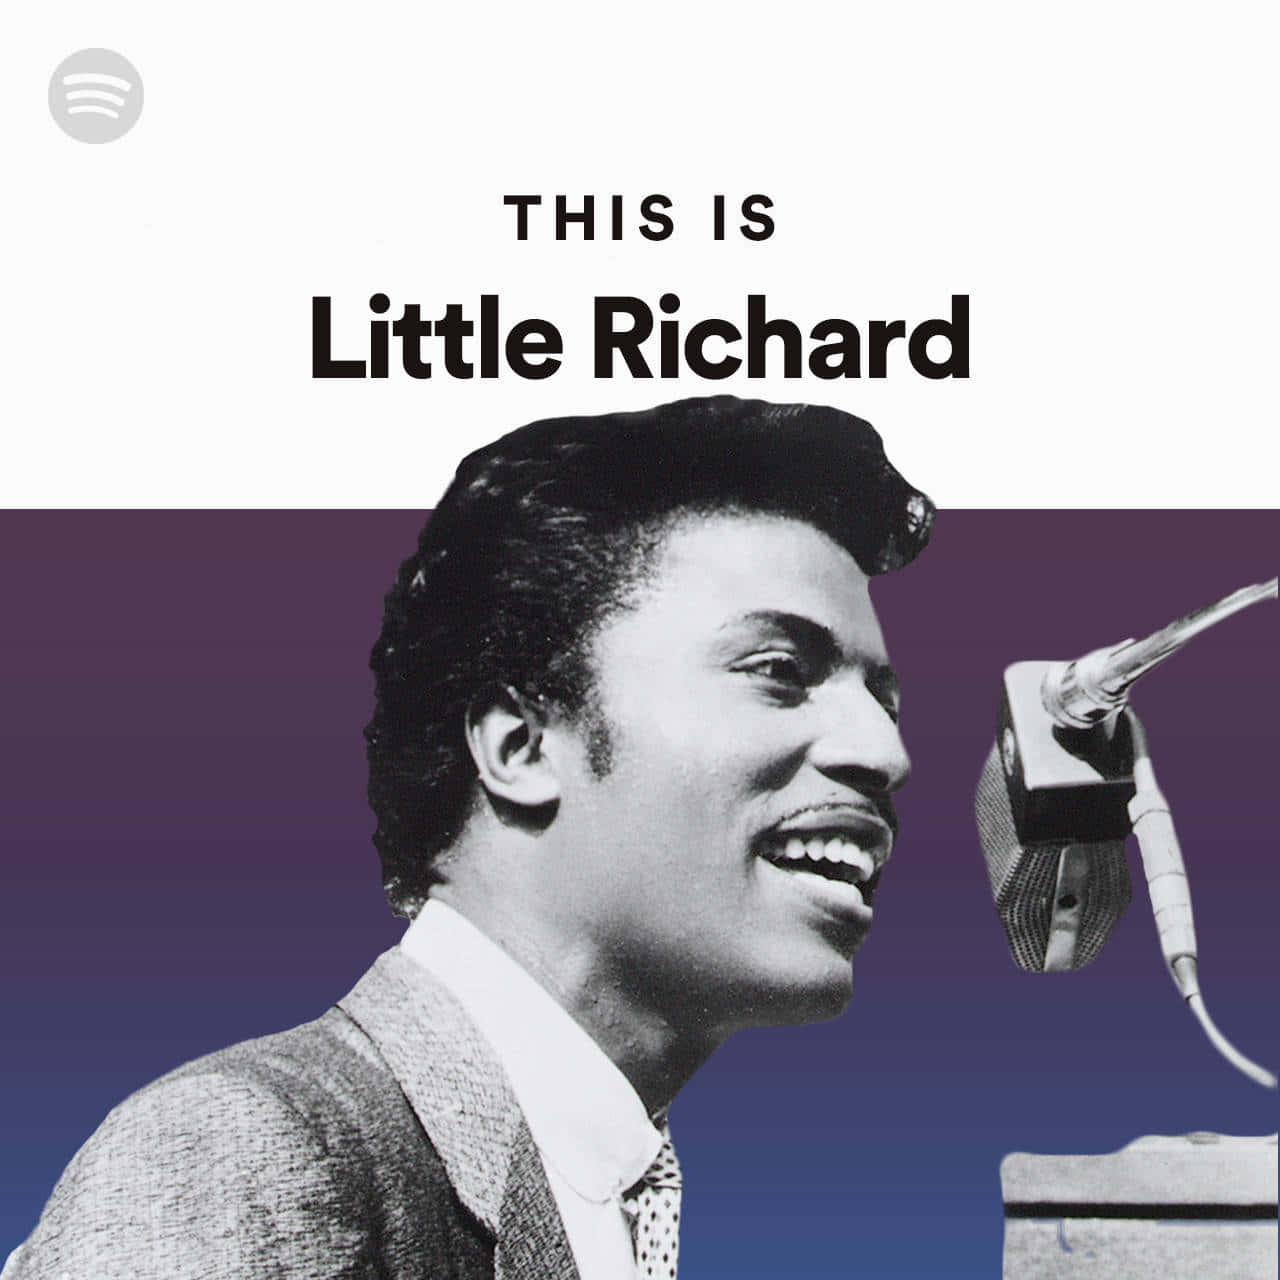 Amerikanskesångaren Little Richards Spotify Spellista-omslag. Wallpaper